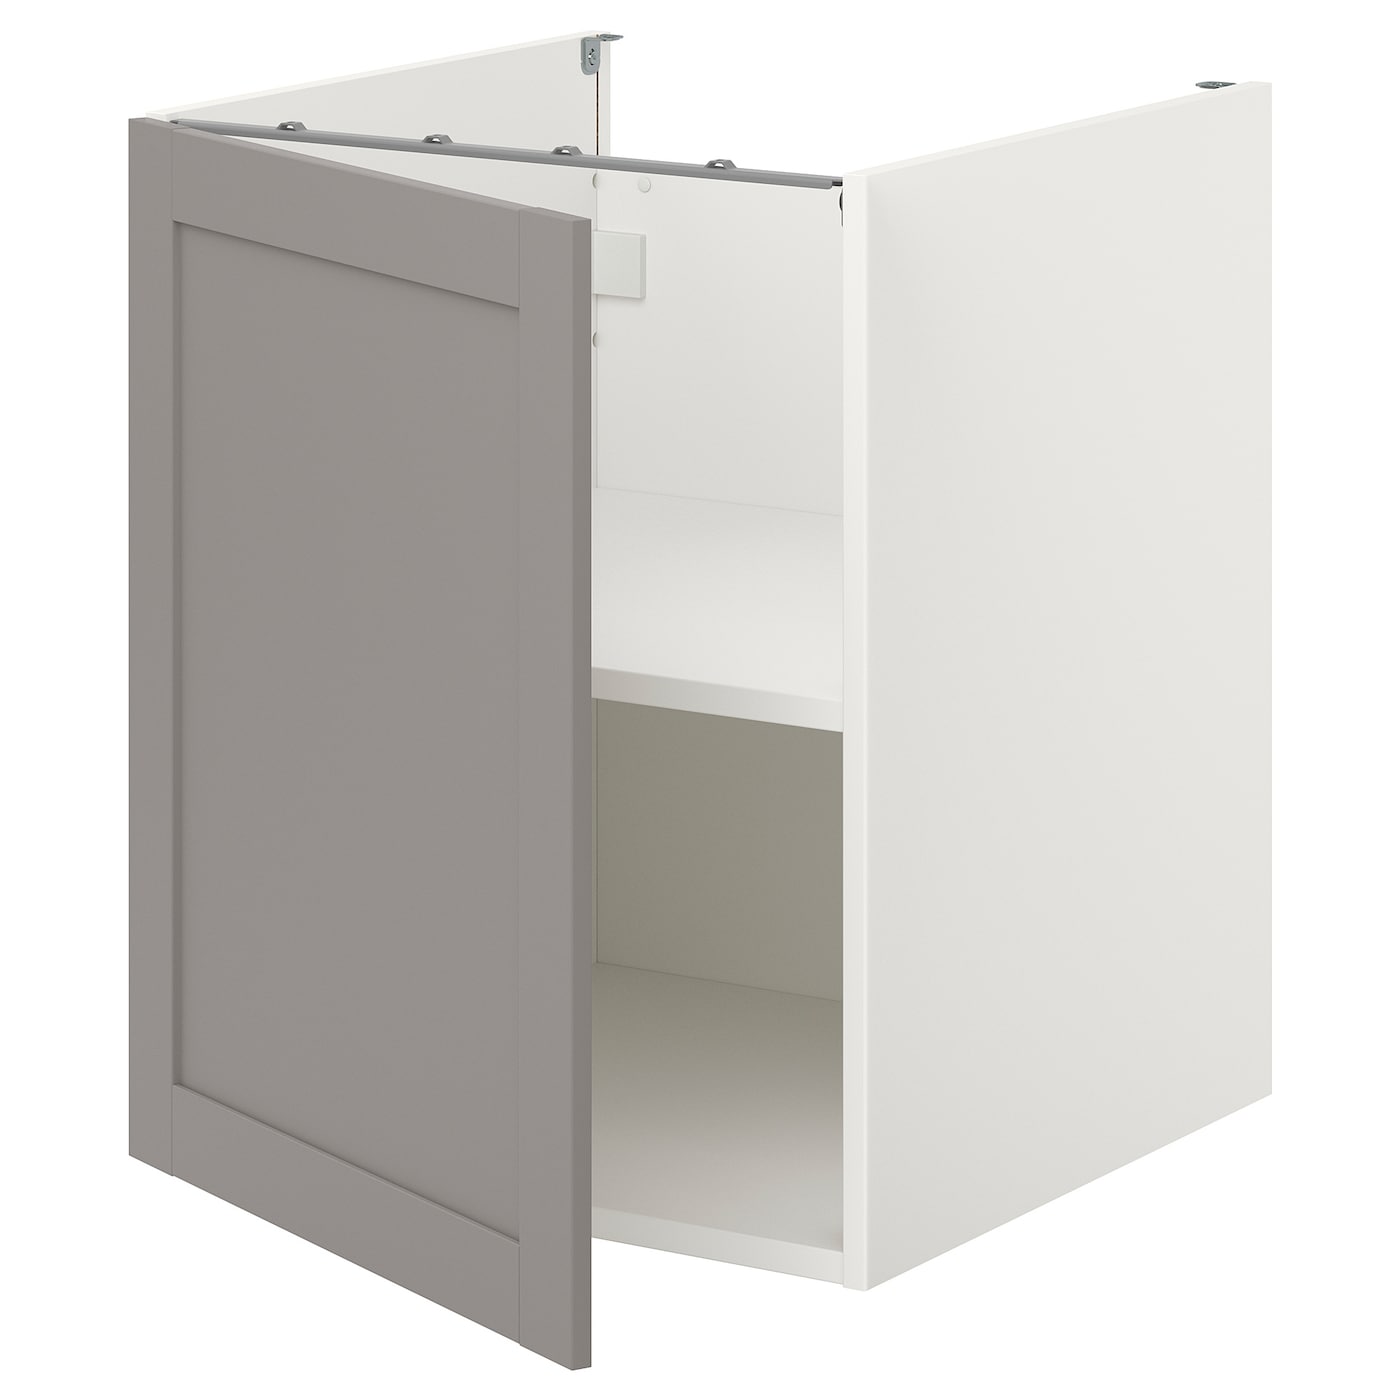 Шкаф с дверцами - IKEA ENHET, 75x62x60см, серый/белый, ЭНХЕТ ИКЕА